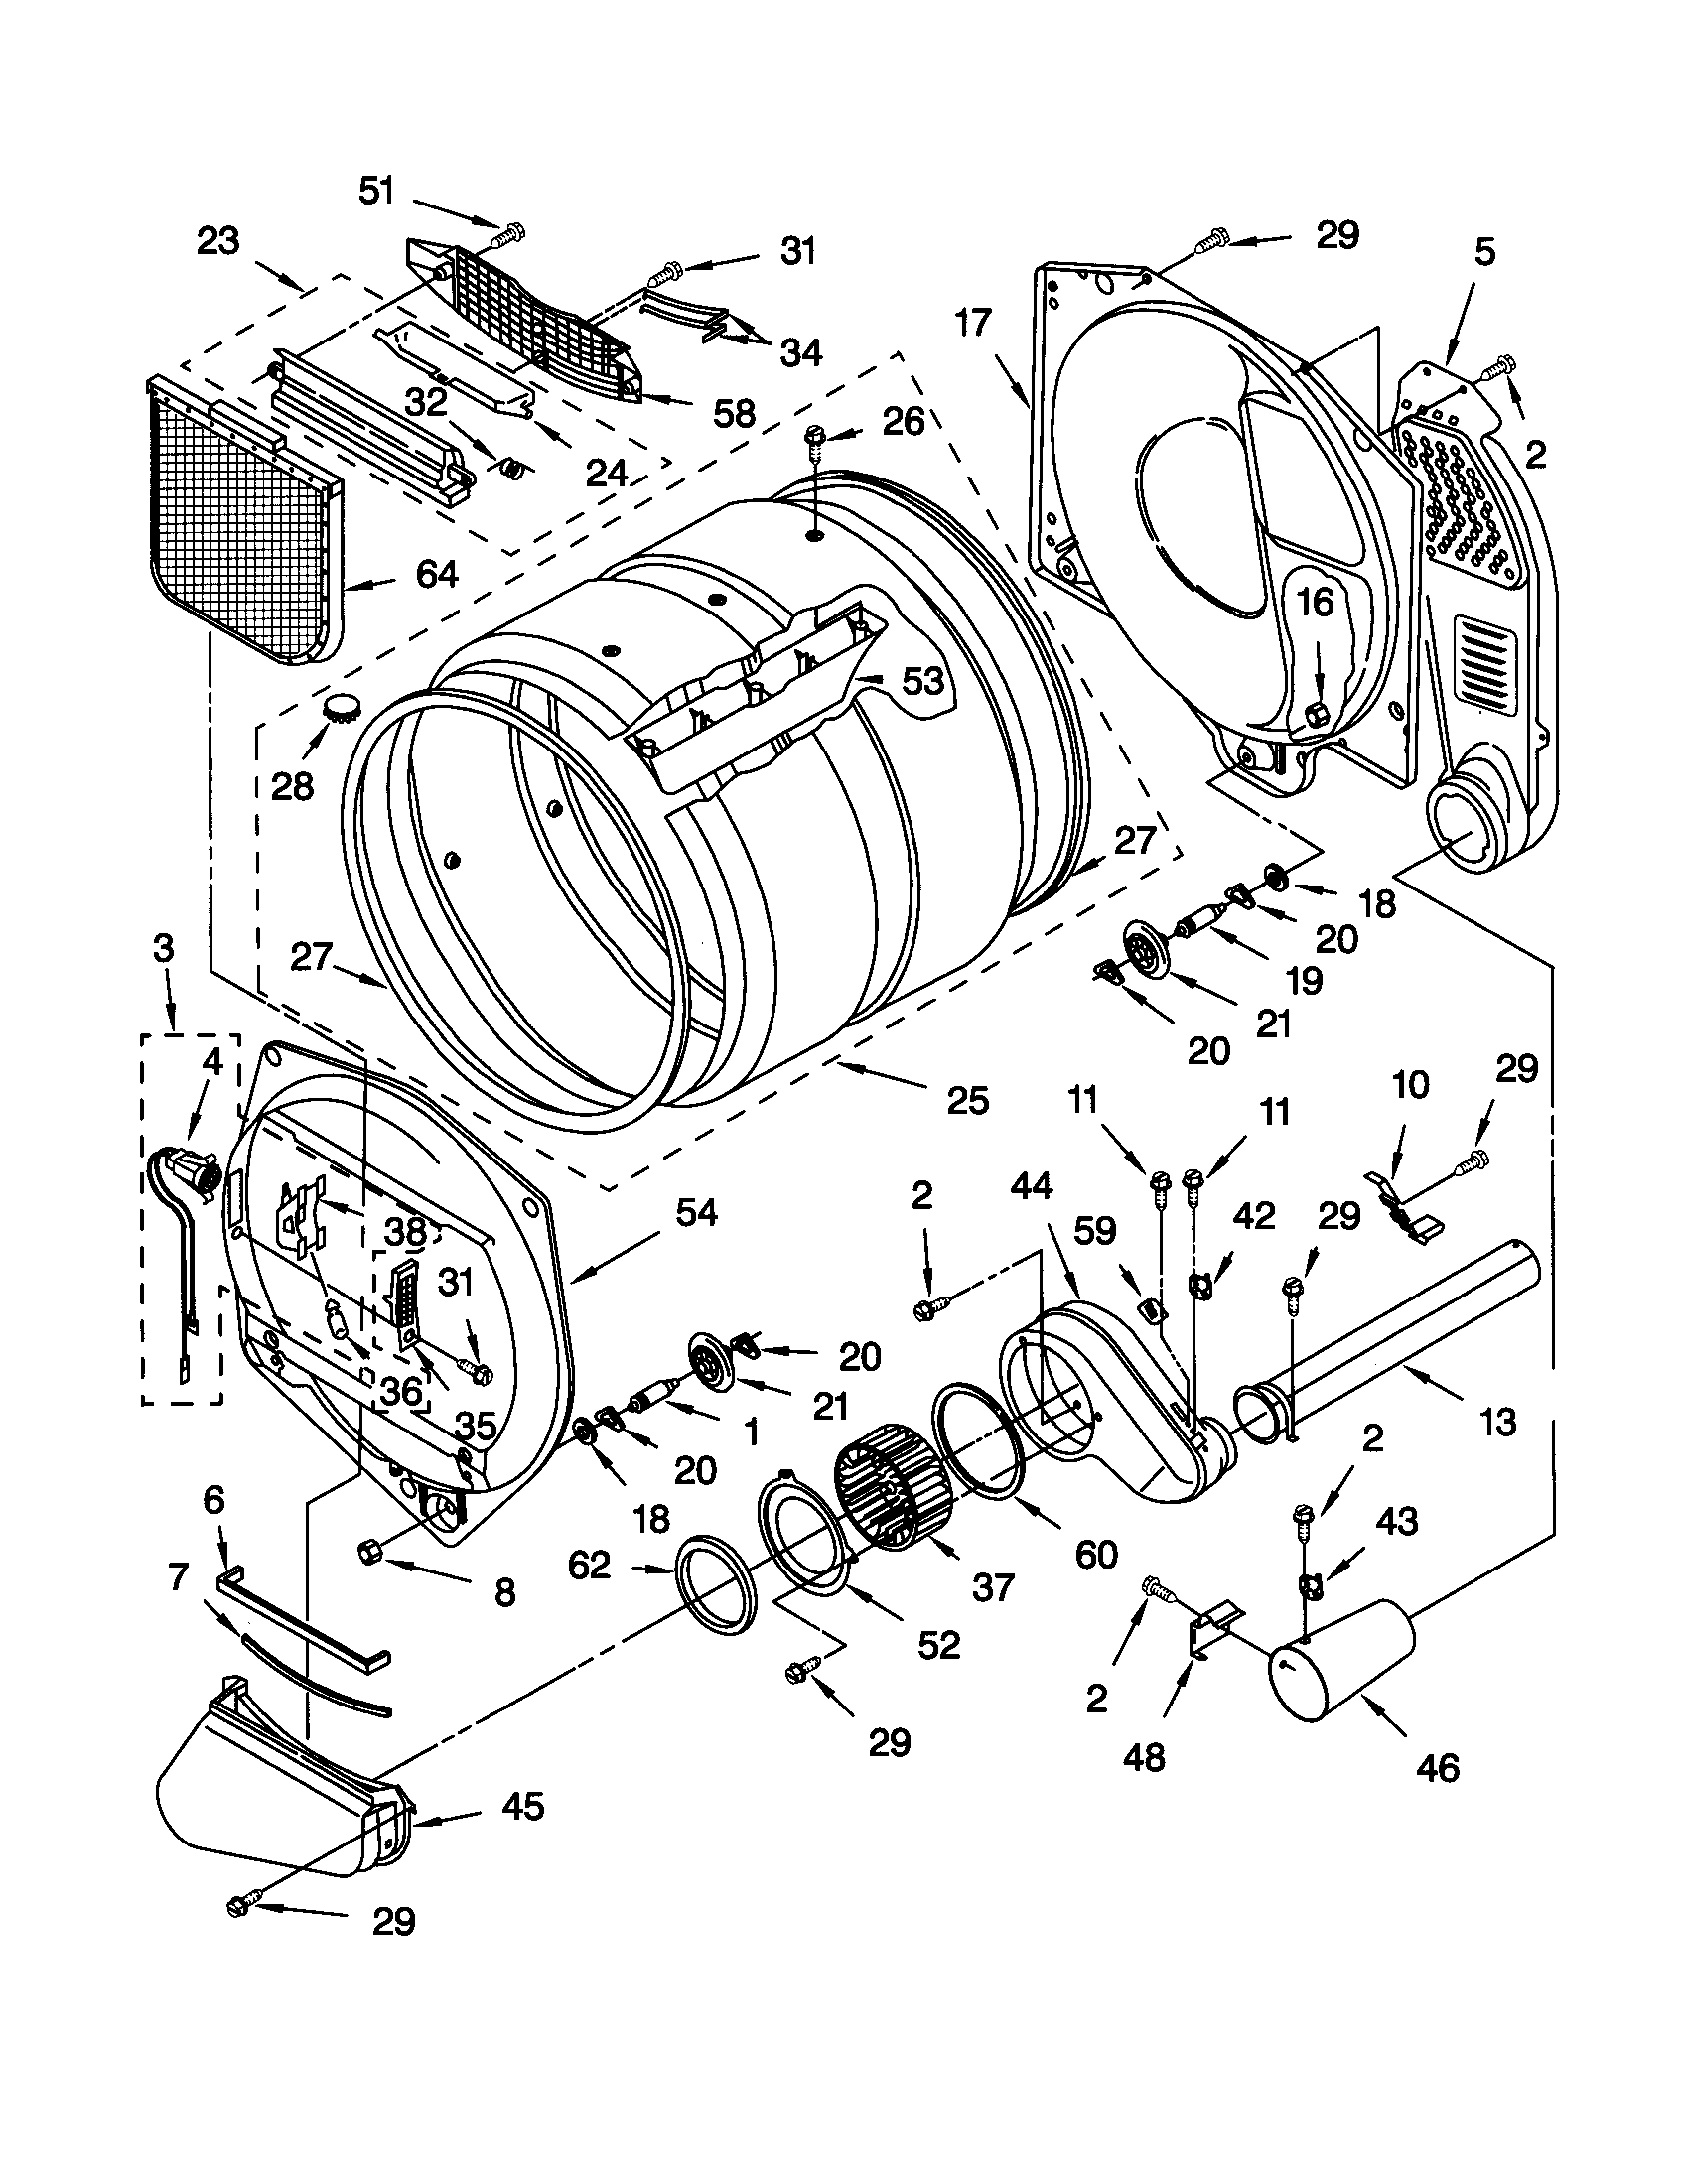 35 Wiring Diagram For Kenmore Dryer Model 110 Wiring Diagram Database